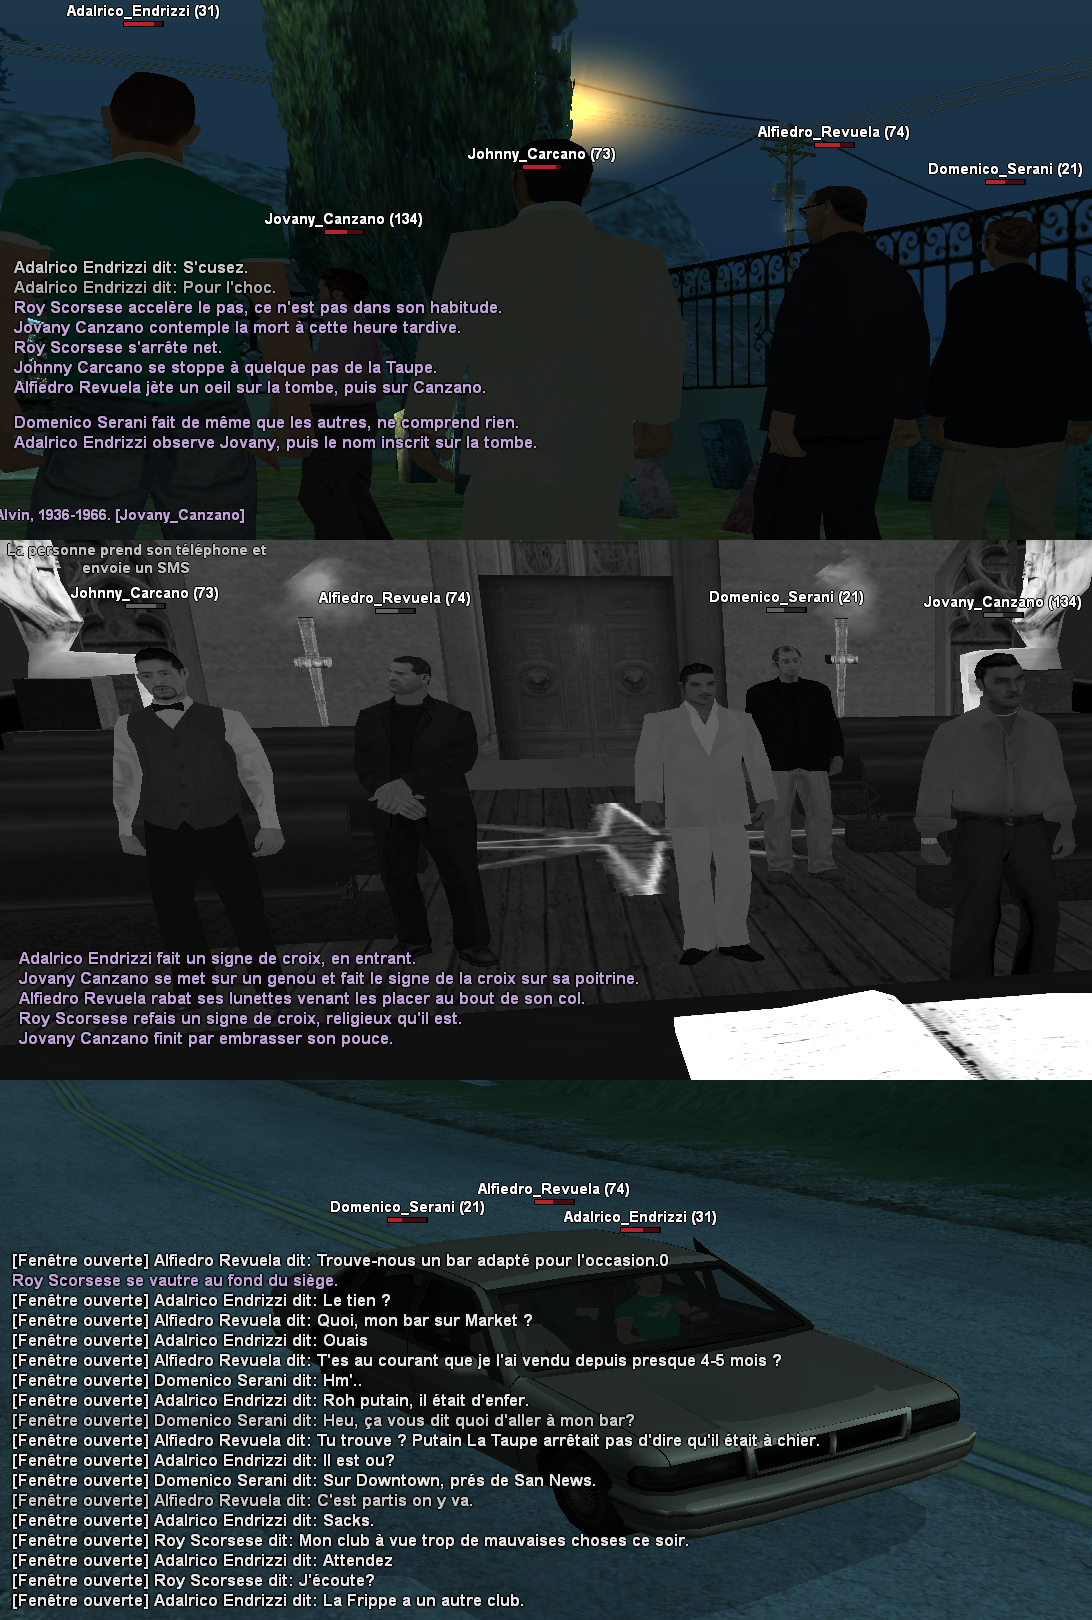 The Mazzanti Mob - Part III. - Page 5 Ihxc